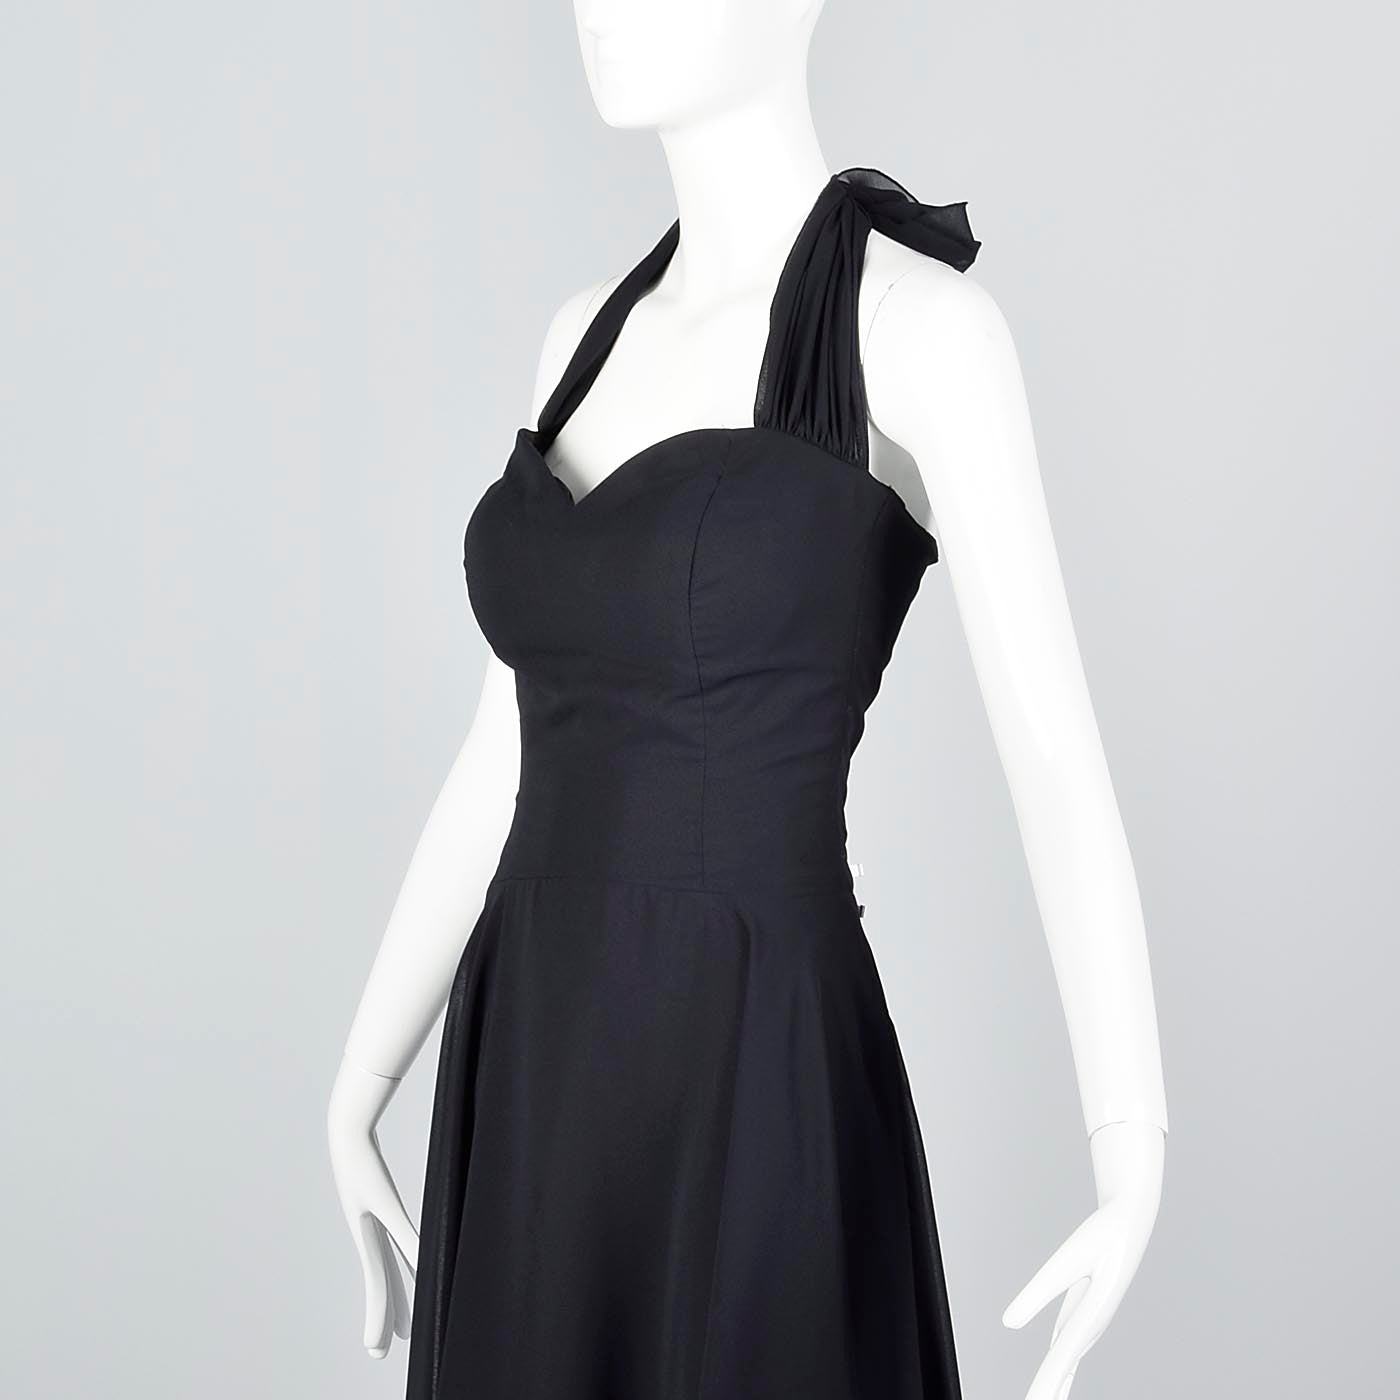 Small 1990s Black Halter Dress